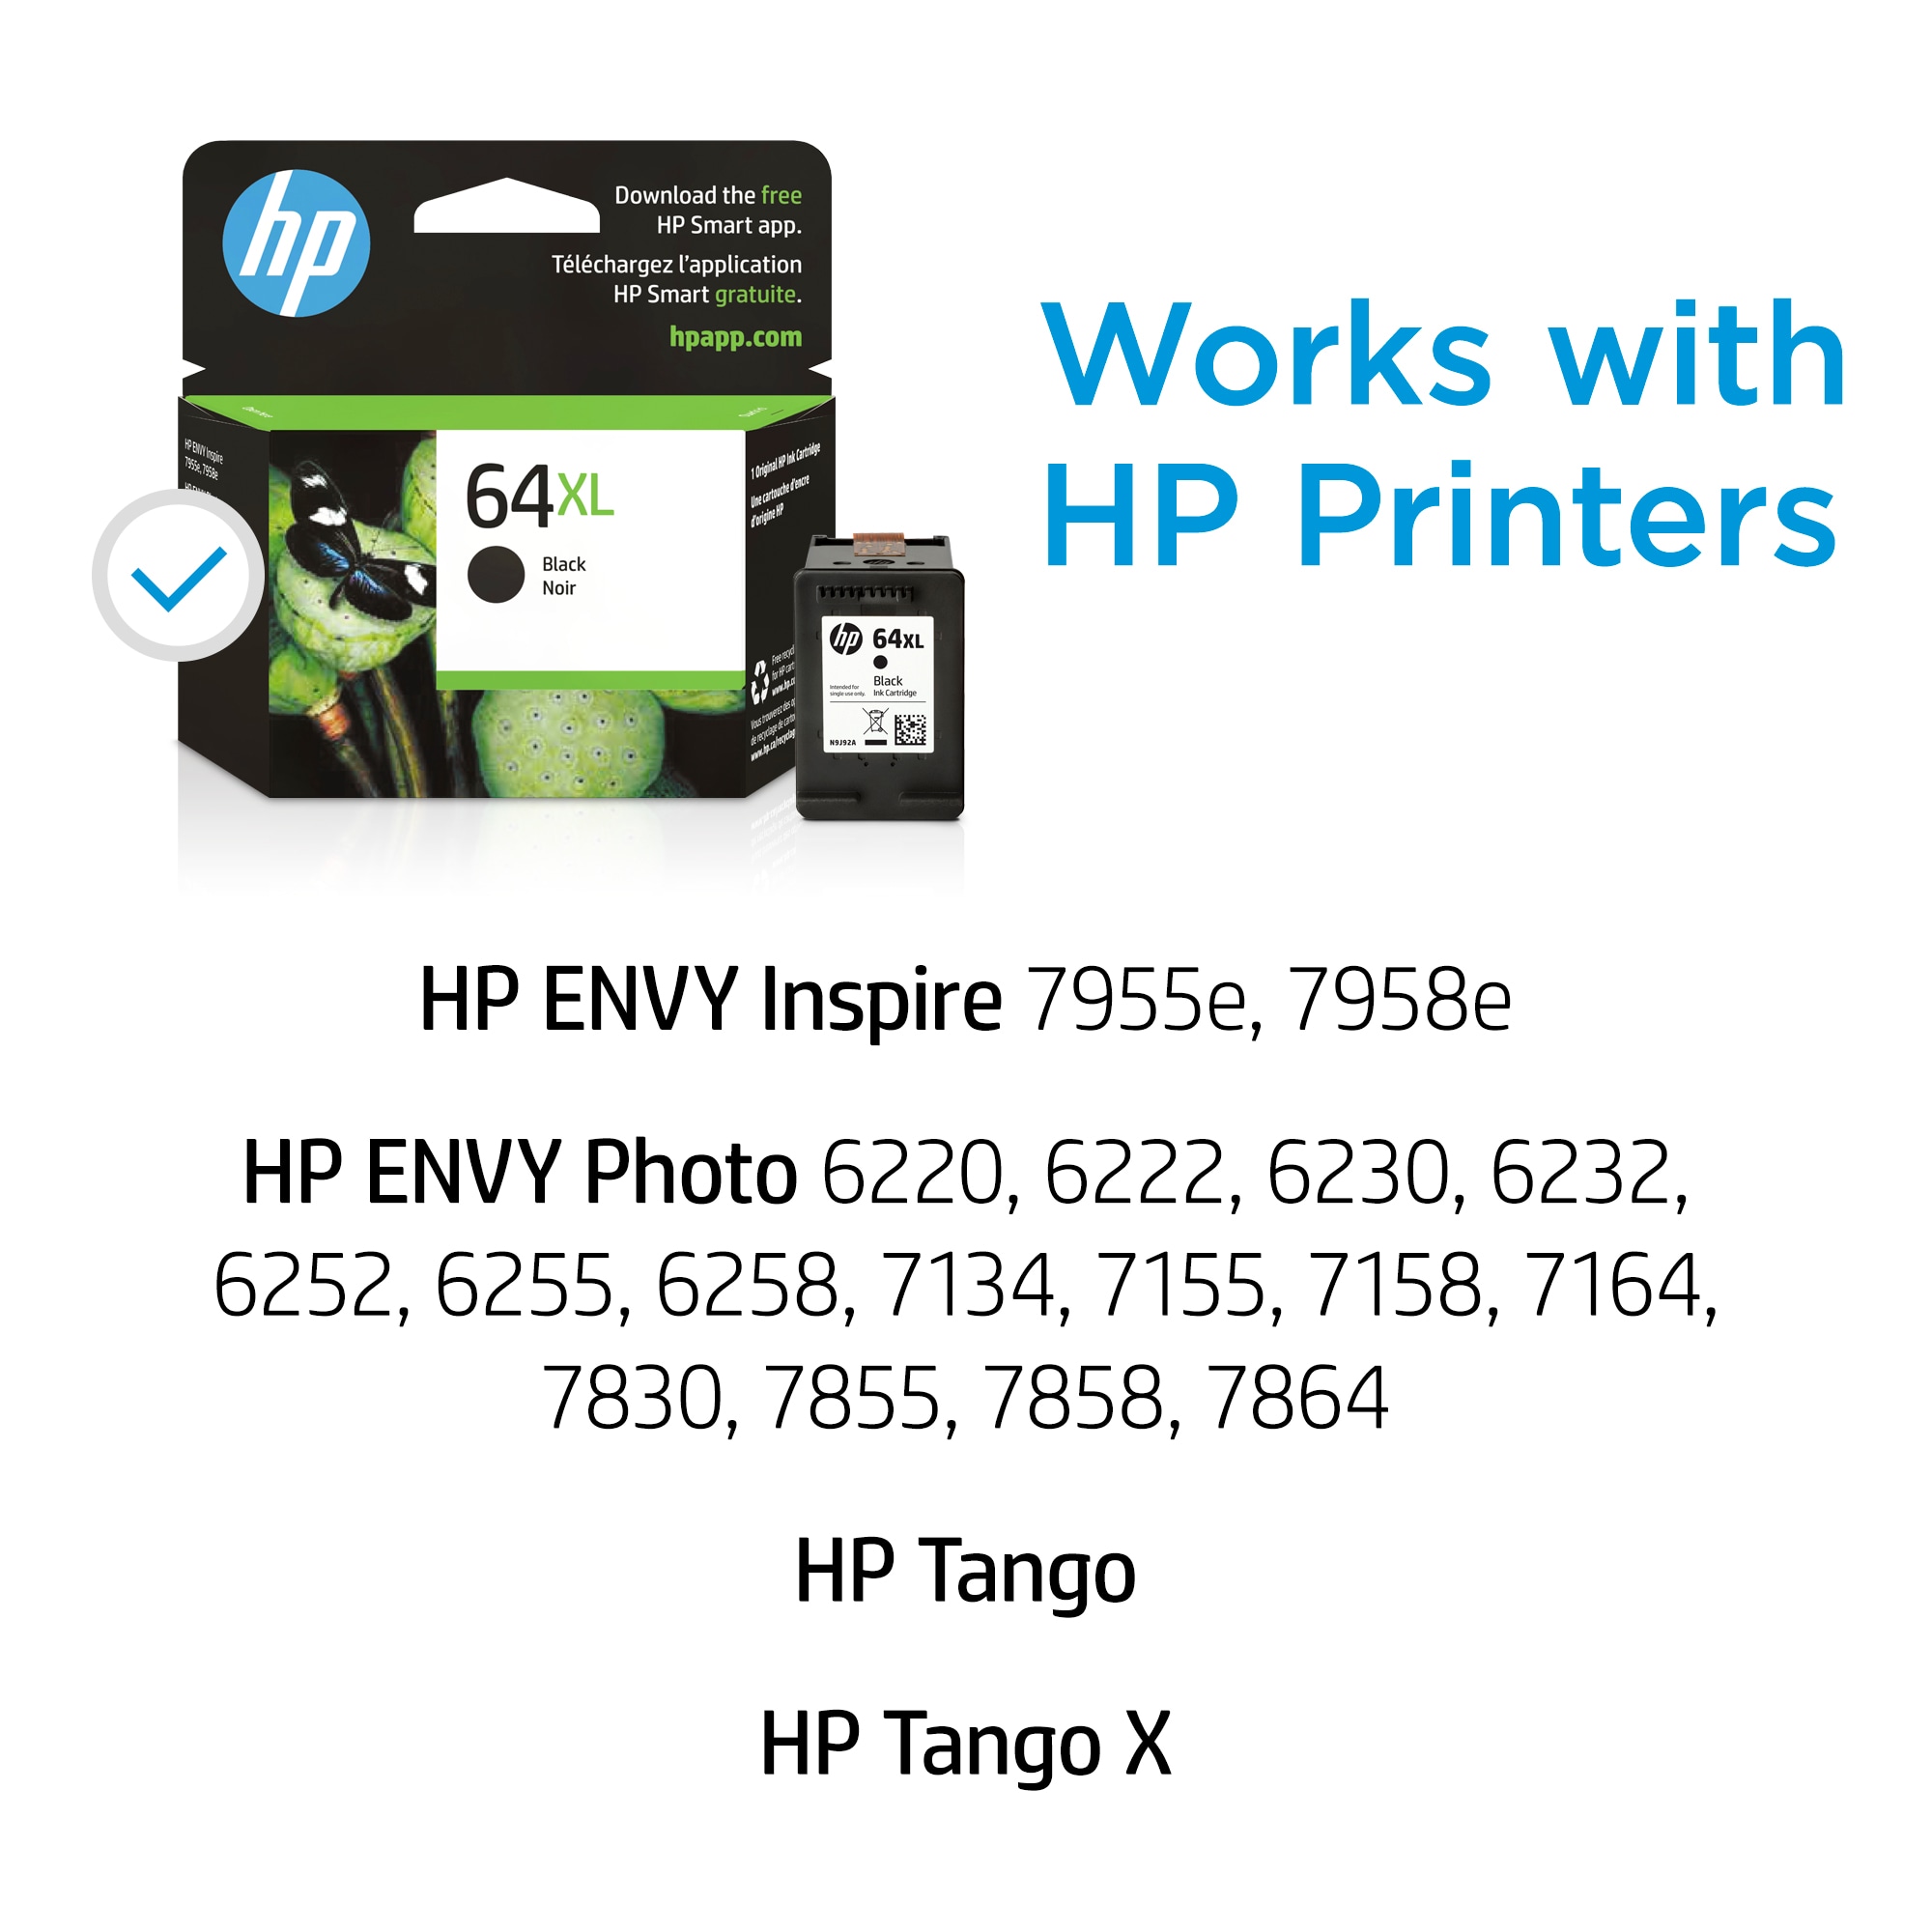 HP 64XL High Yield Black Original Ink Cartridge, ~600 pages, N9J92AN#140 - image 5 of 8